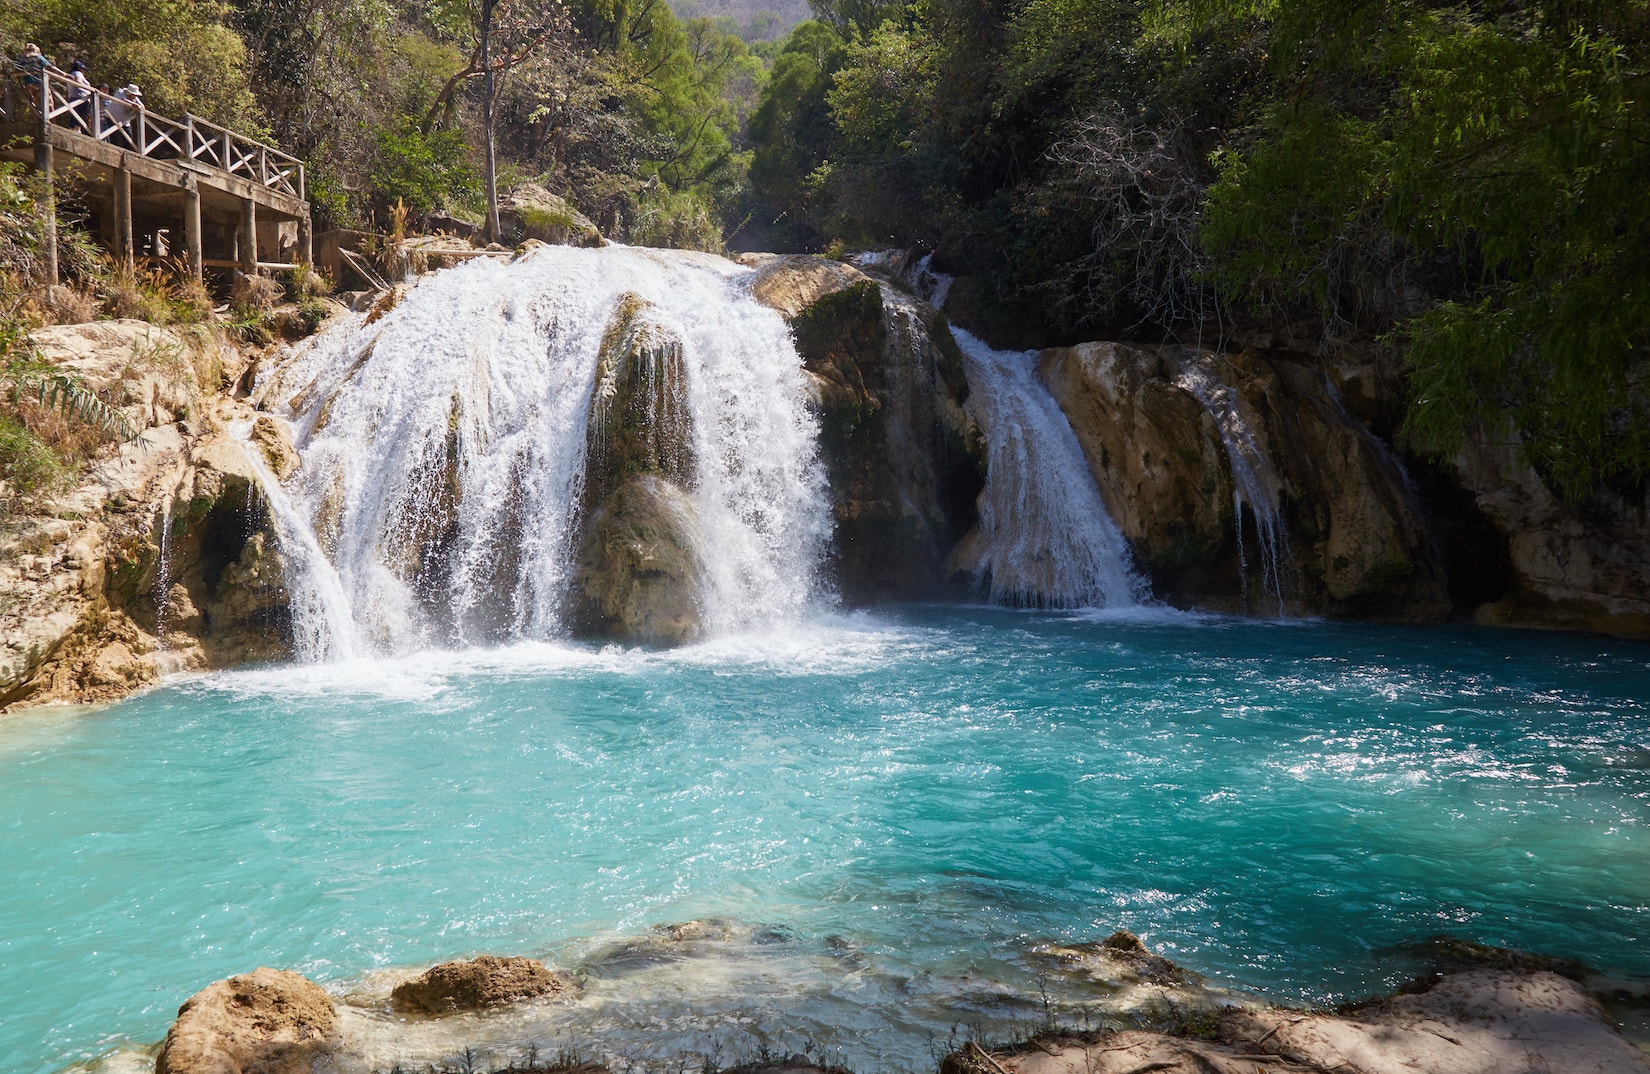 Visiting El Chiflón Waterfalls